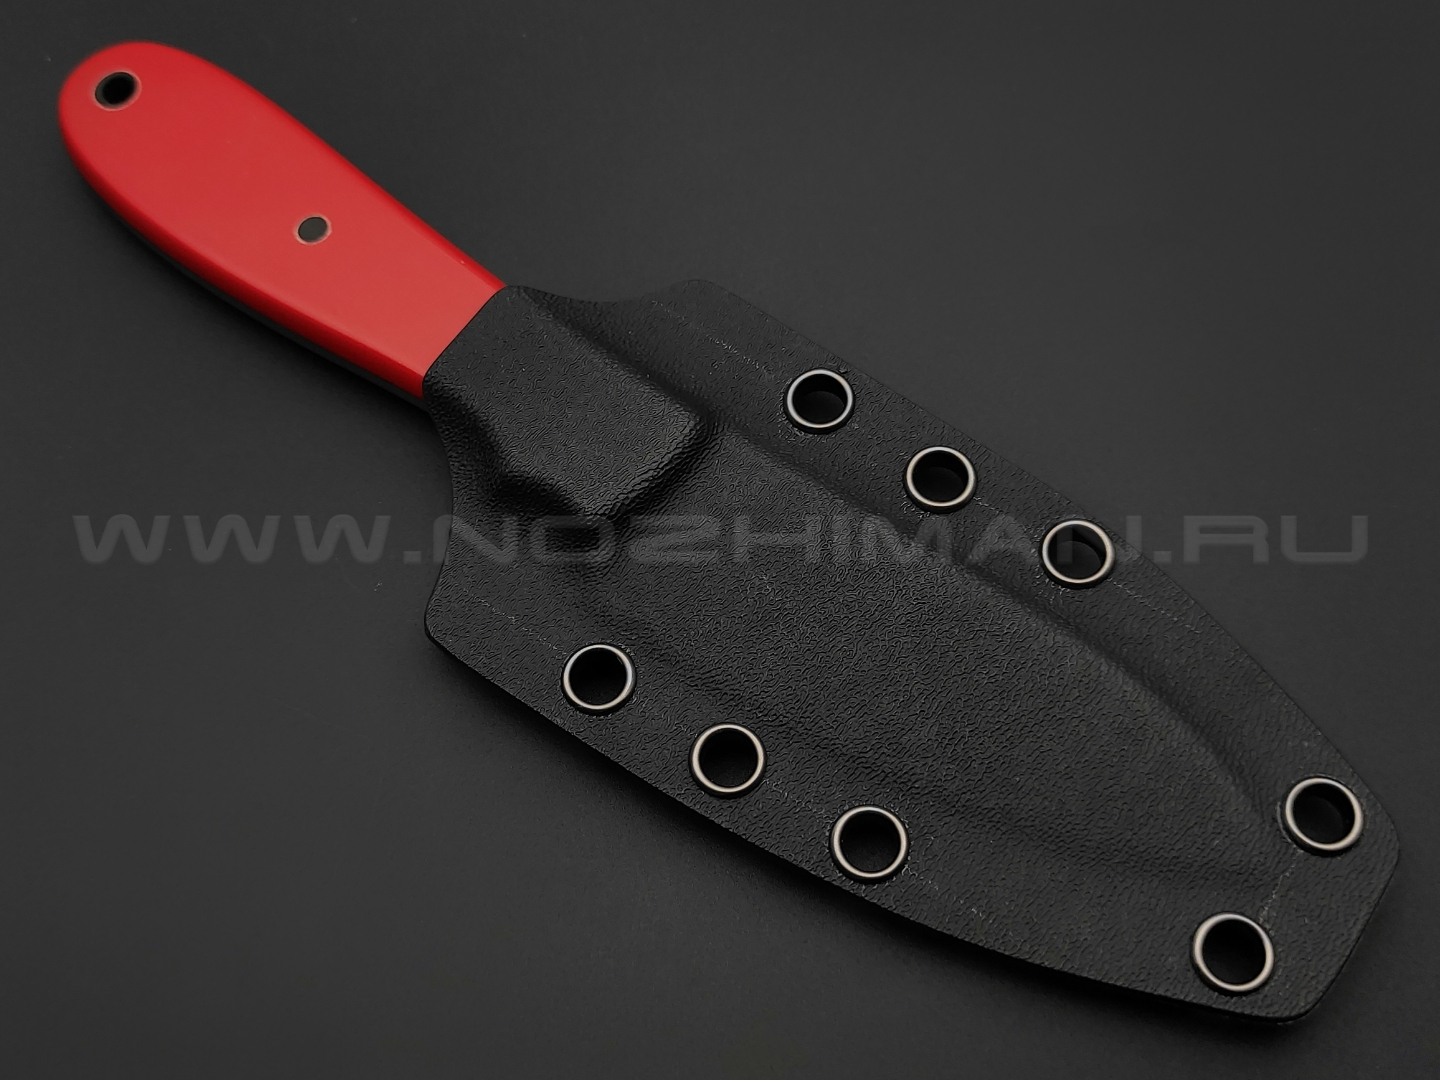 Zh KNIVES нож True сталь N690 сатин, рукоять G10 red